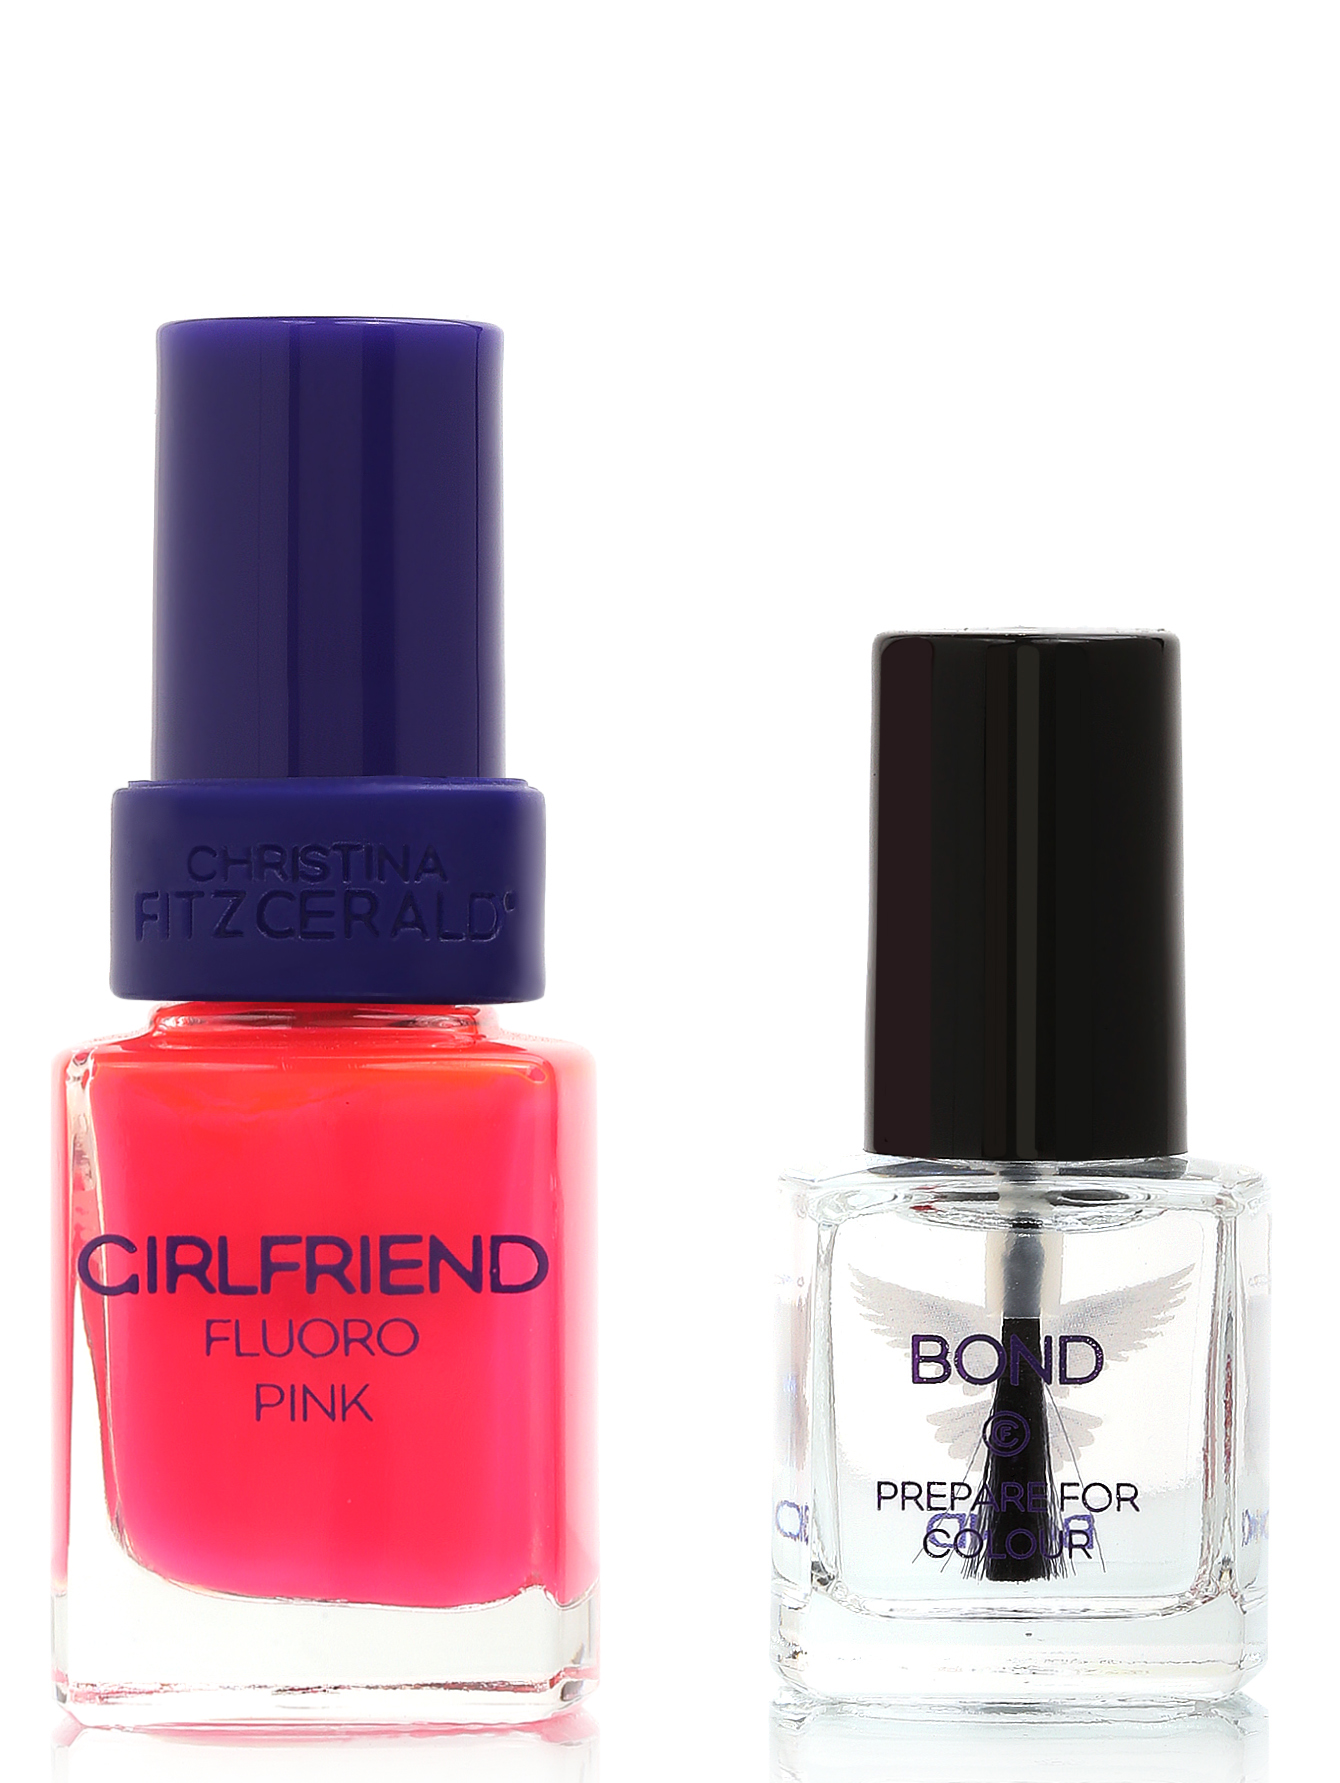  Лак Girlfriend - Fluoro pink + bond-подготовка, Nail Care, 12+9ml - Общий вид